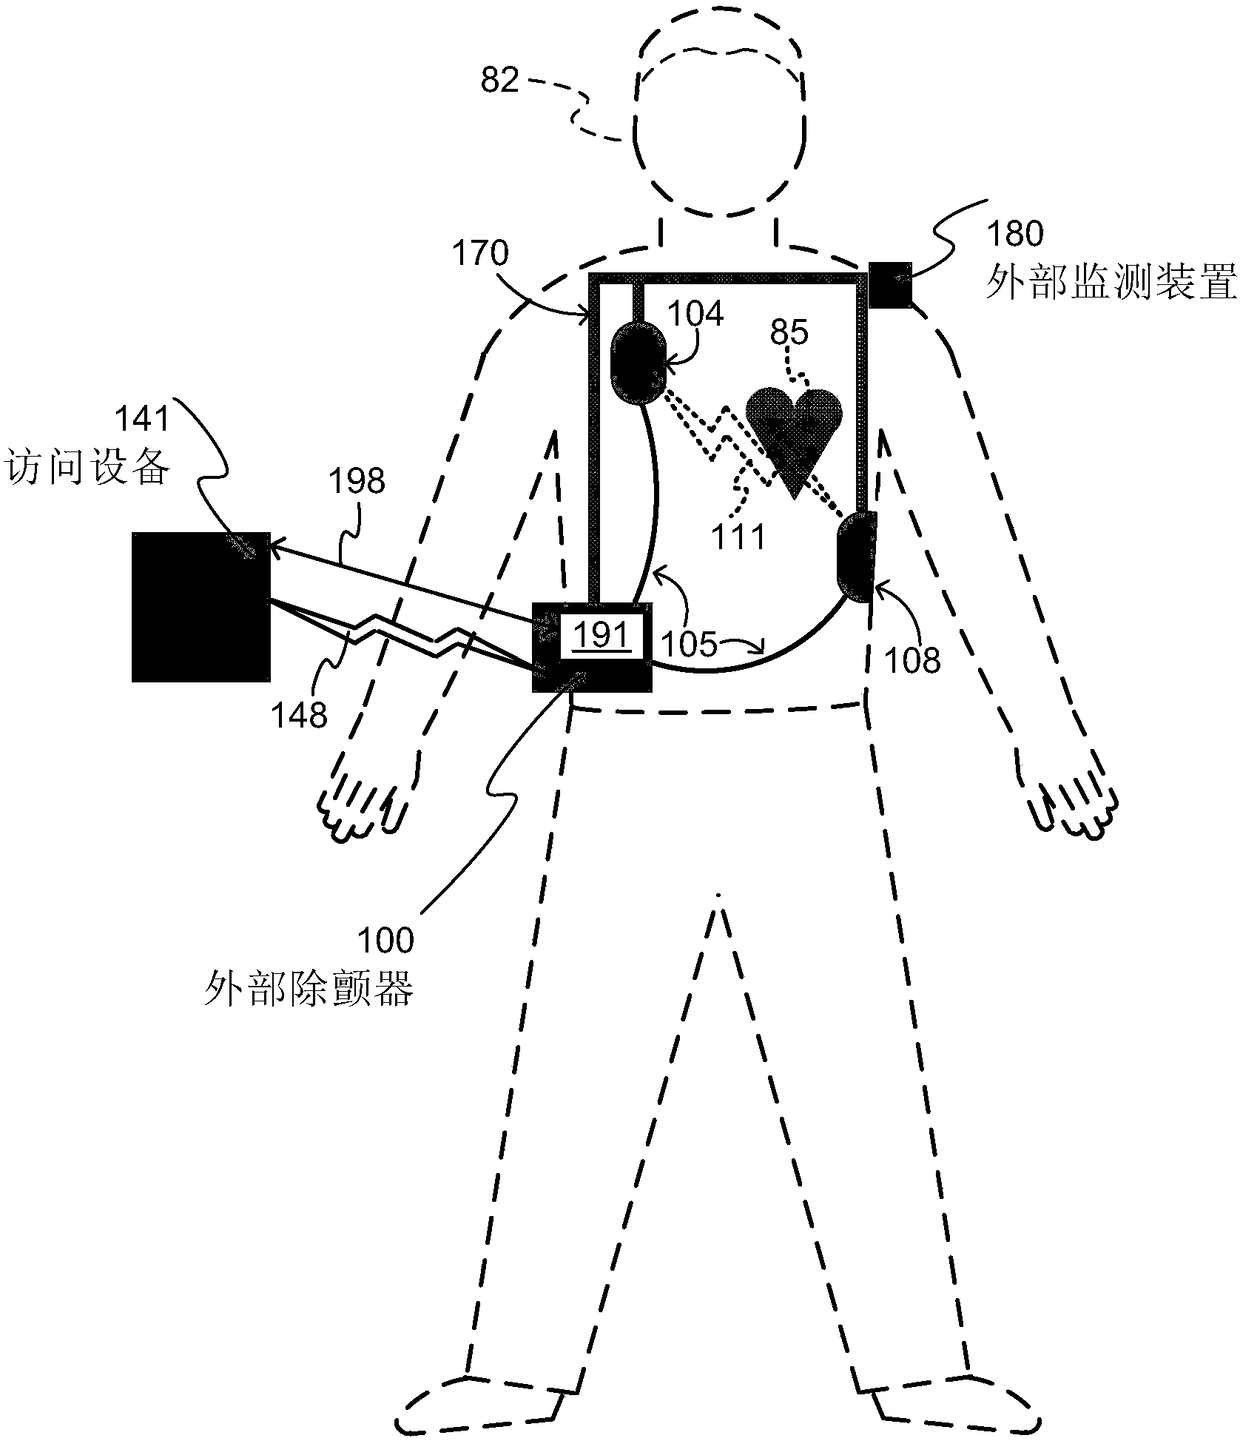 Wearable cardioverter defibrillator (WCD) system uploading configuration data via safety label